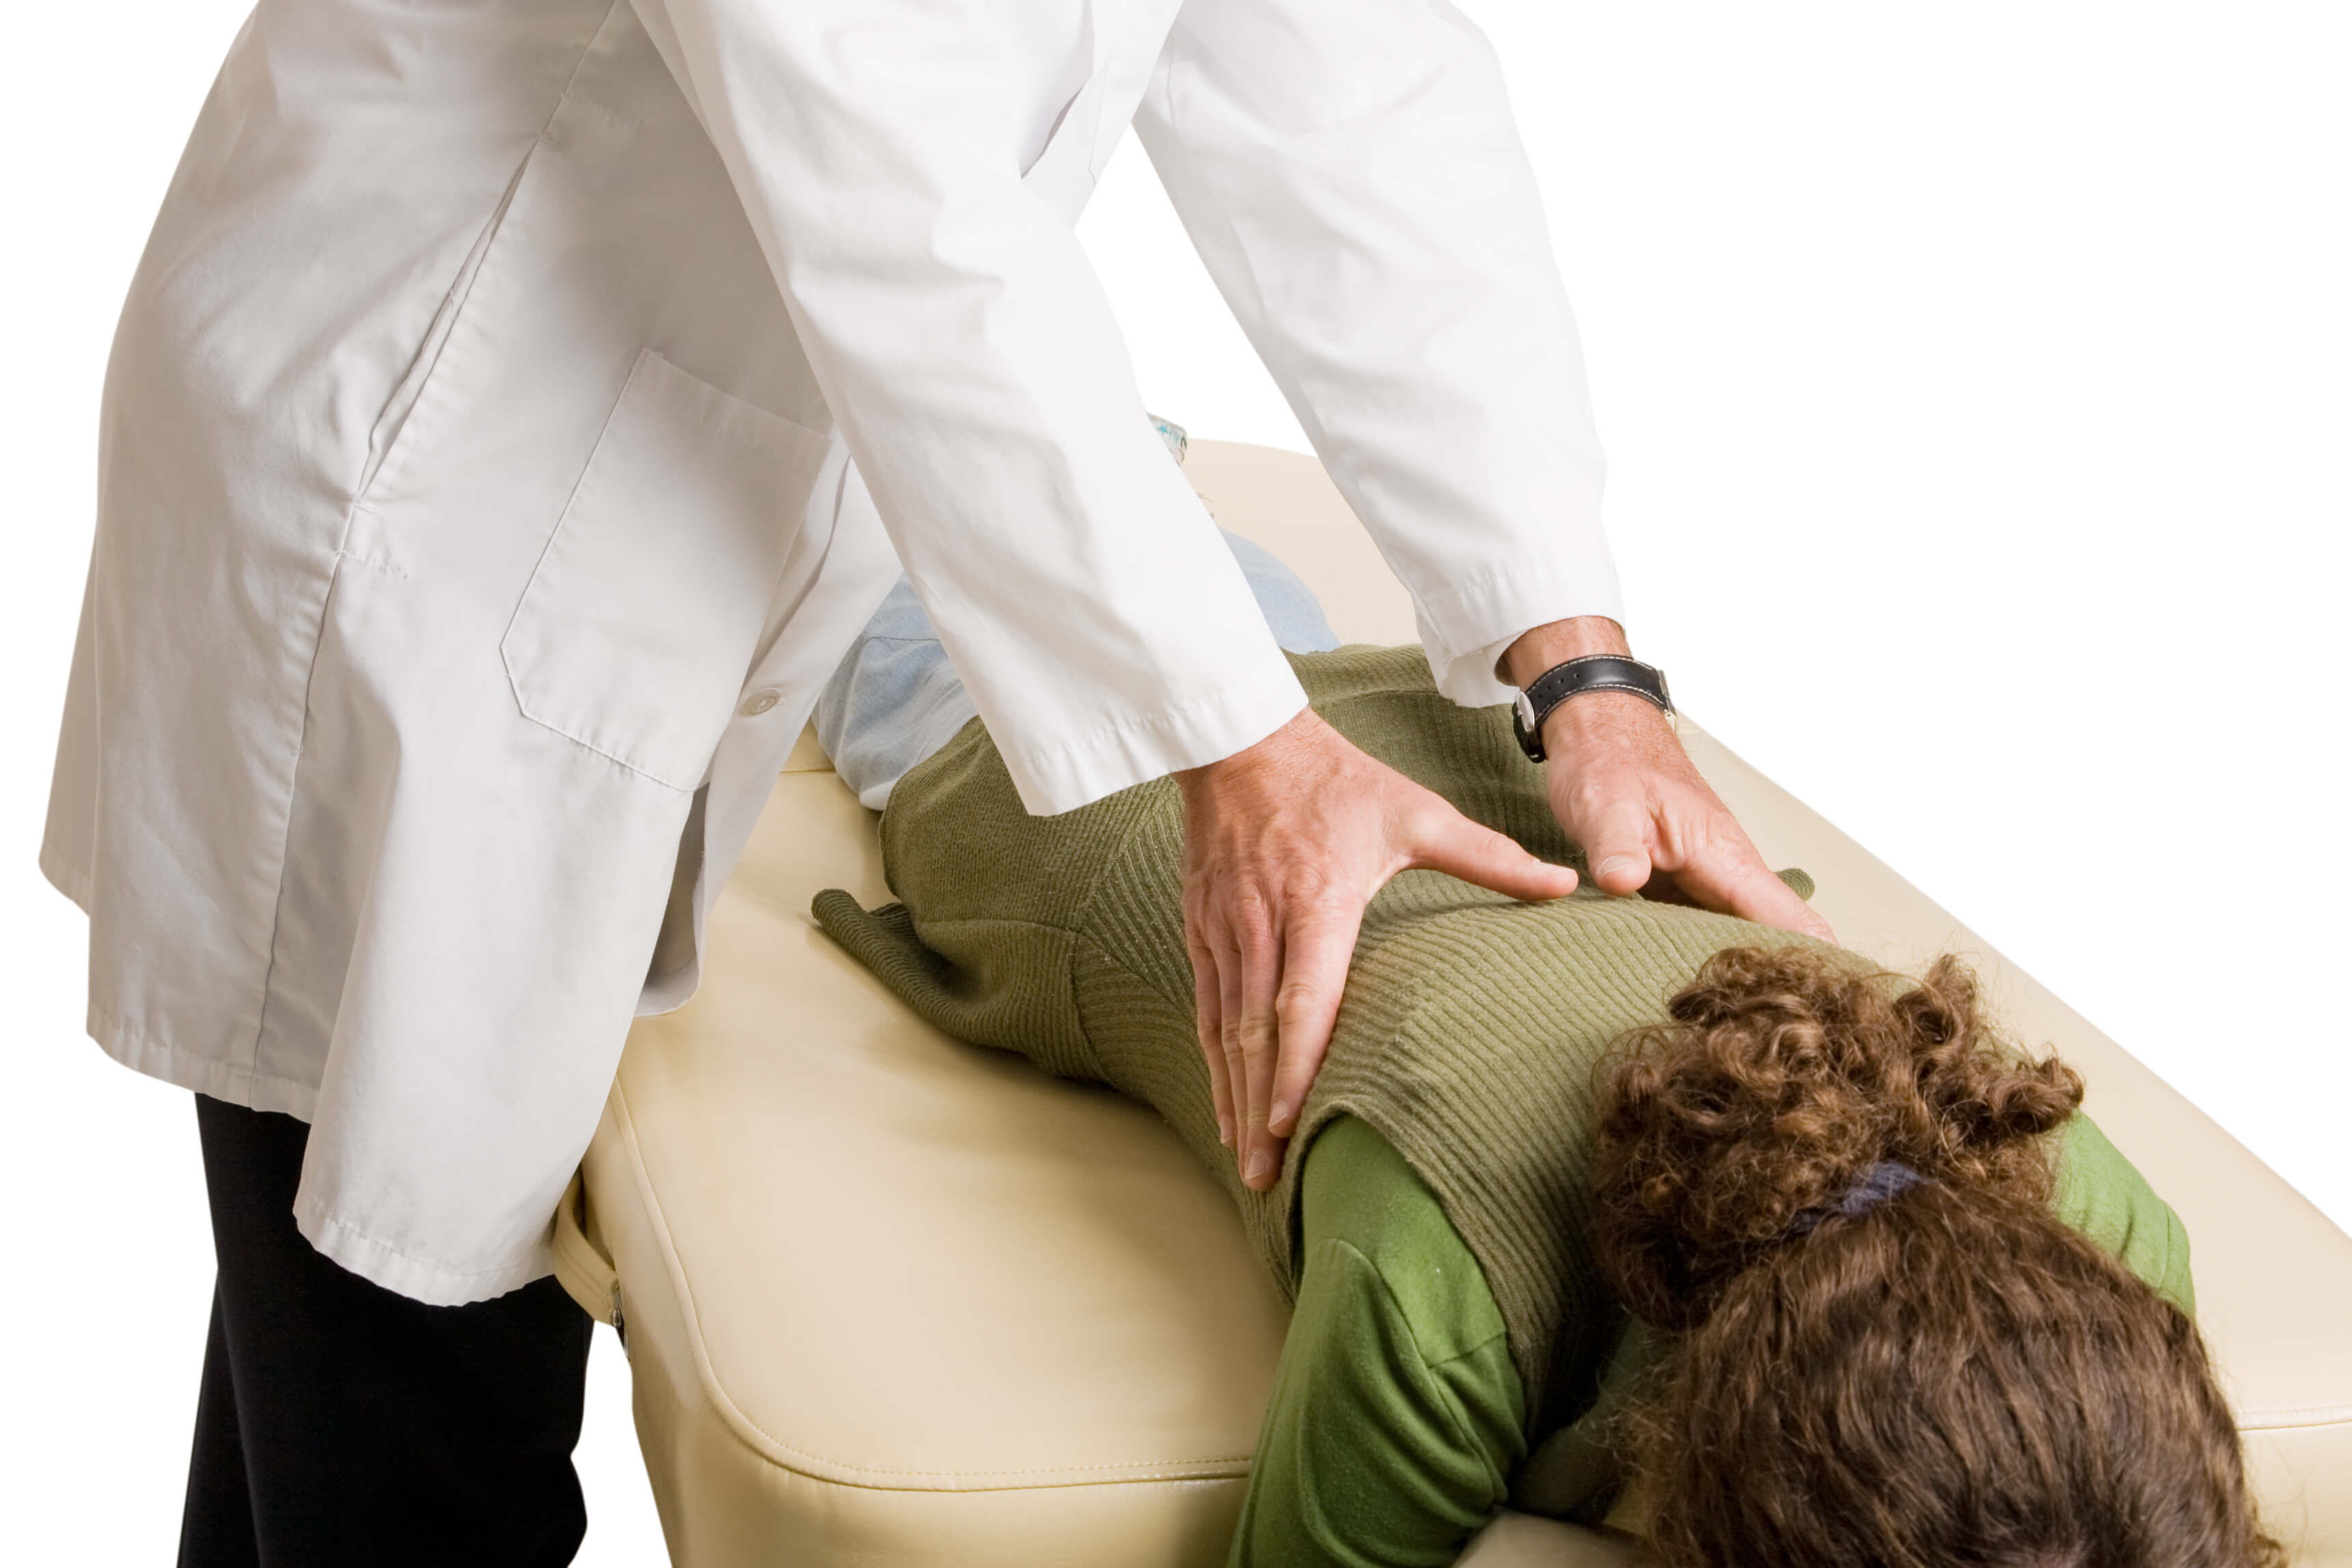 Associate Chiropractor Contract Review